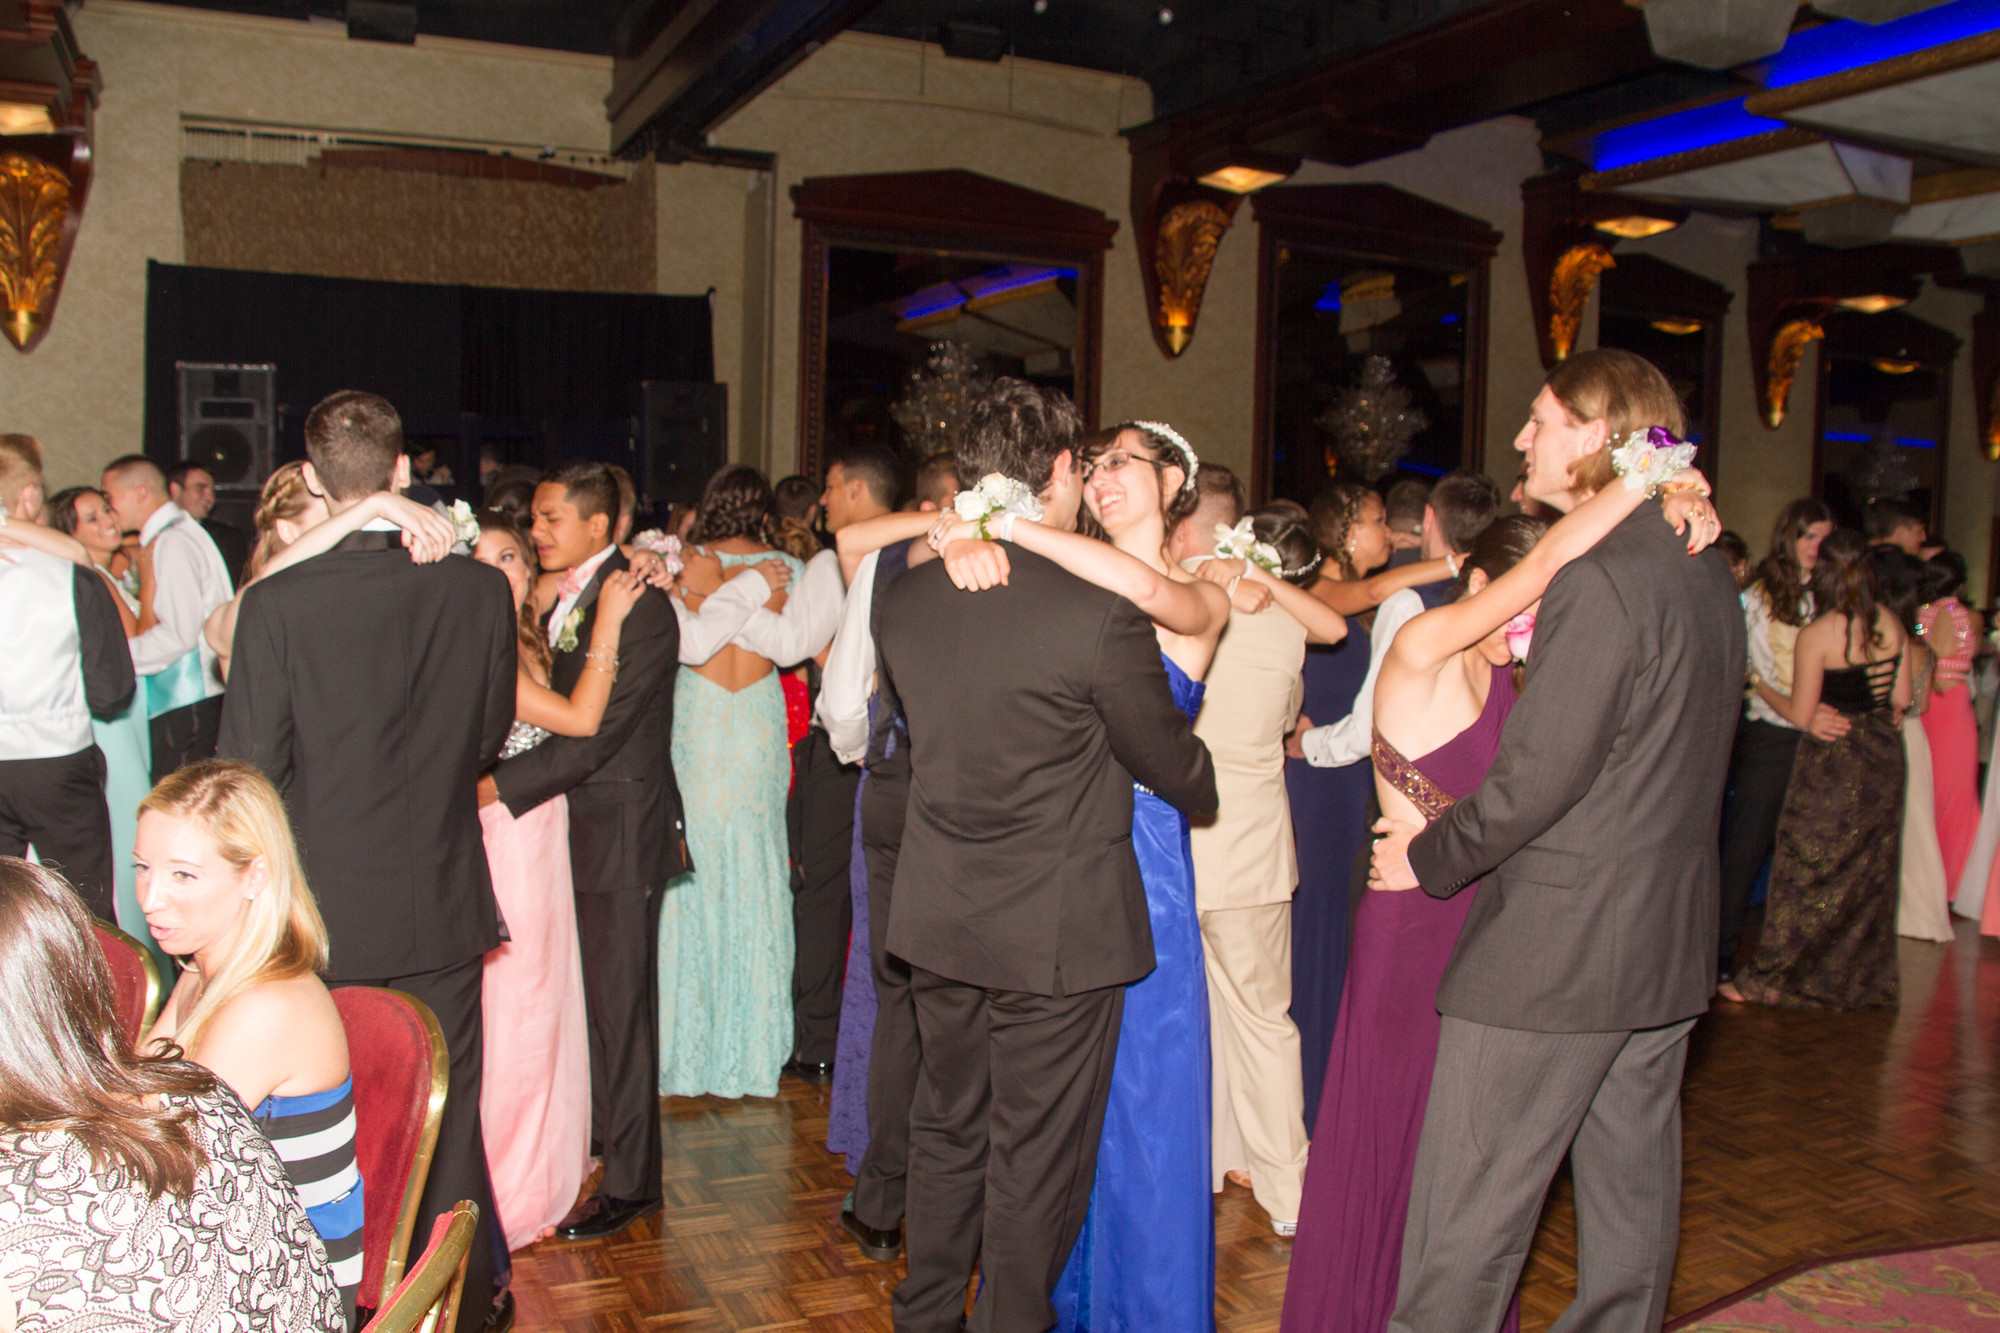 The dance floor was packed.